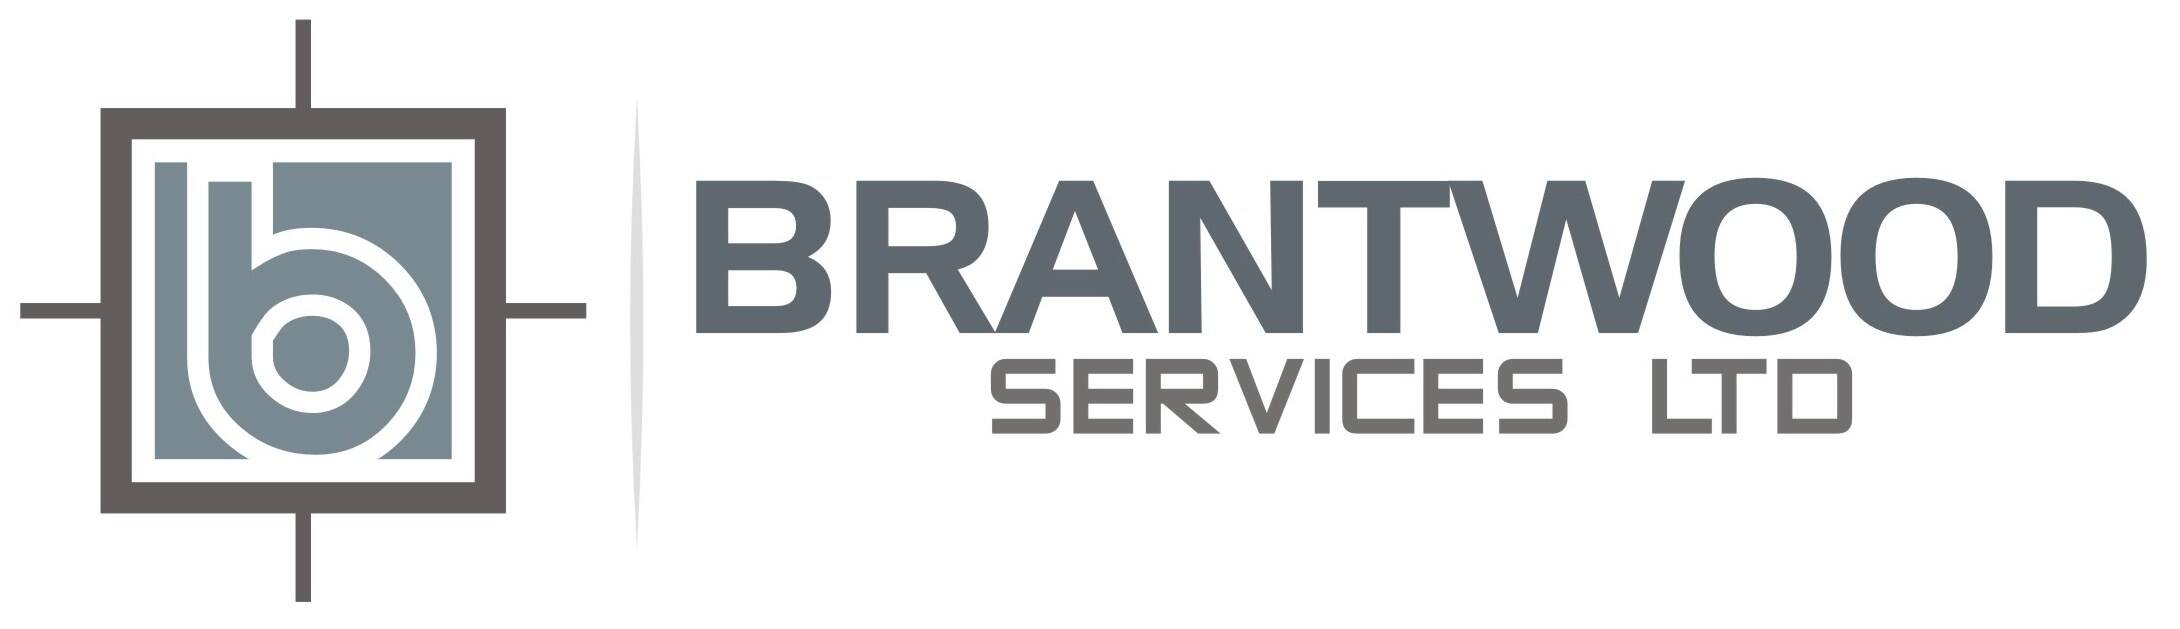 Brantwood Services Ltd.